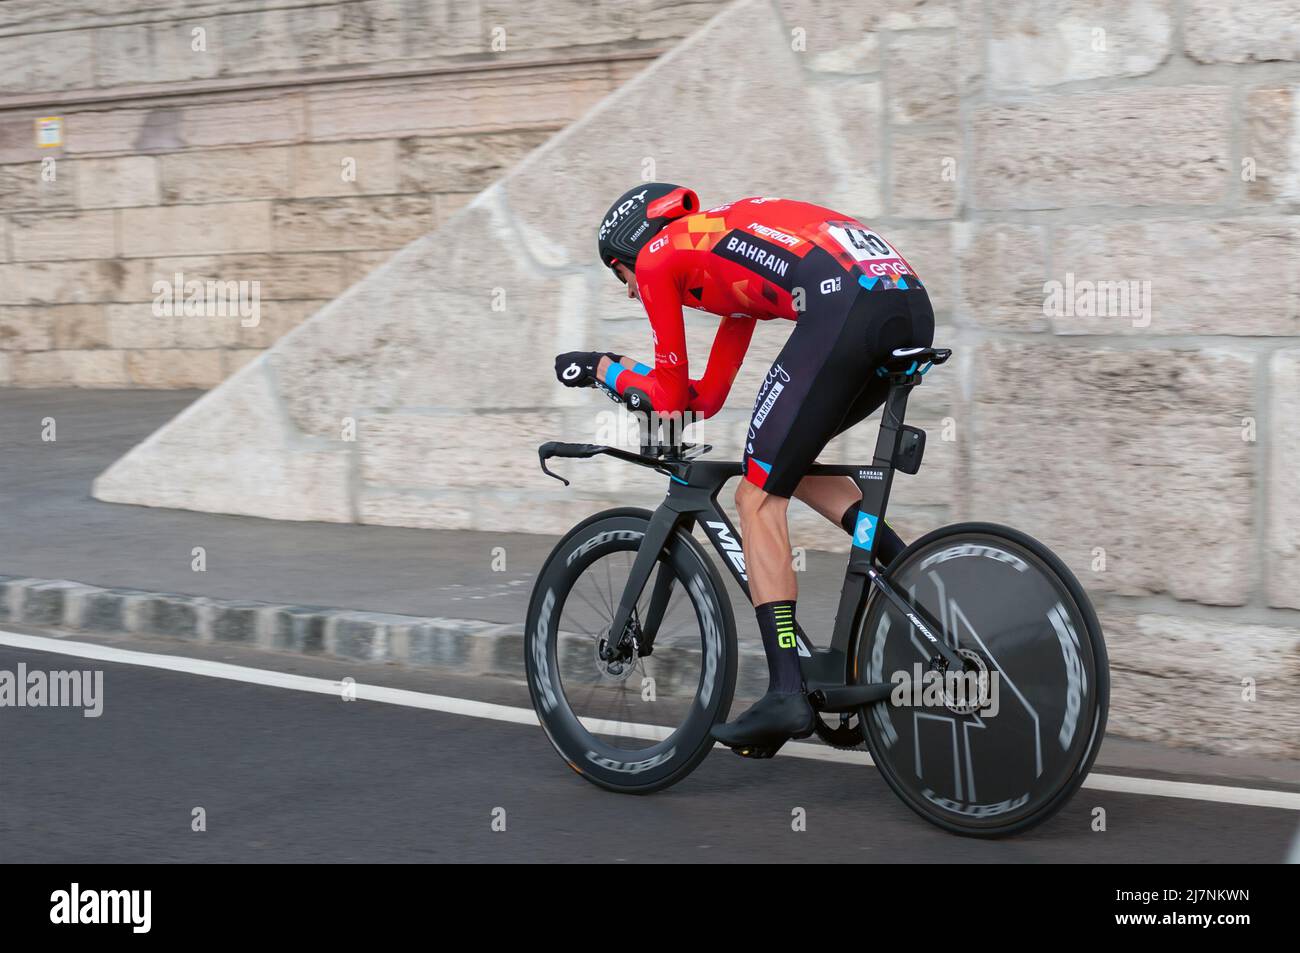 BUDAPEST, UNGARN - MAI 0- 7, 2022: Profi-Radfahrer Wout Poels BAHRAIN SIEGREICH Giro D'Italia Etappe 2 Zeitfahren - Radrennen am 07. Mai 20 Stockfoto